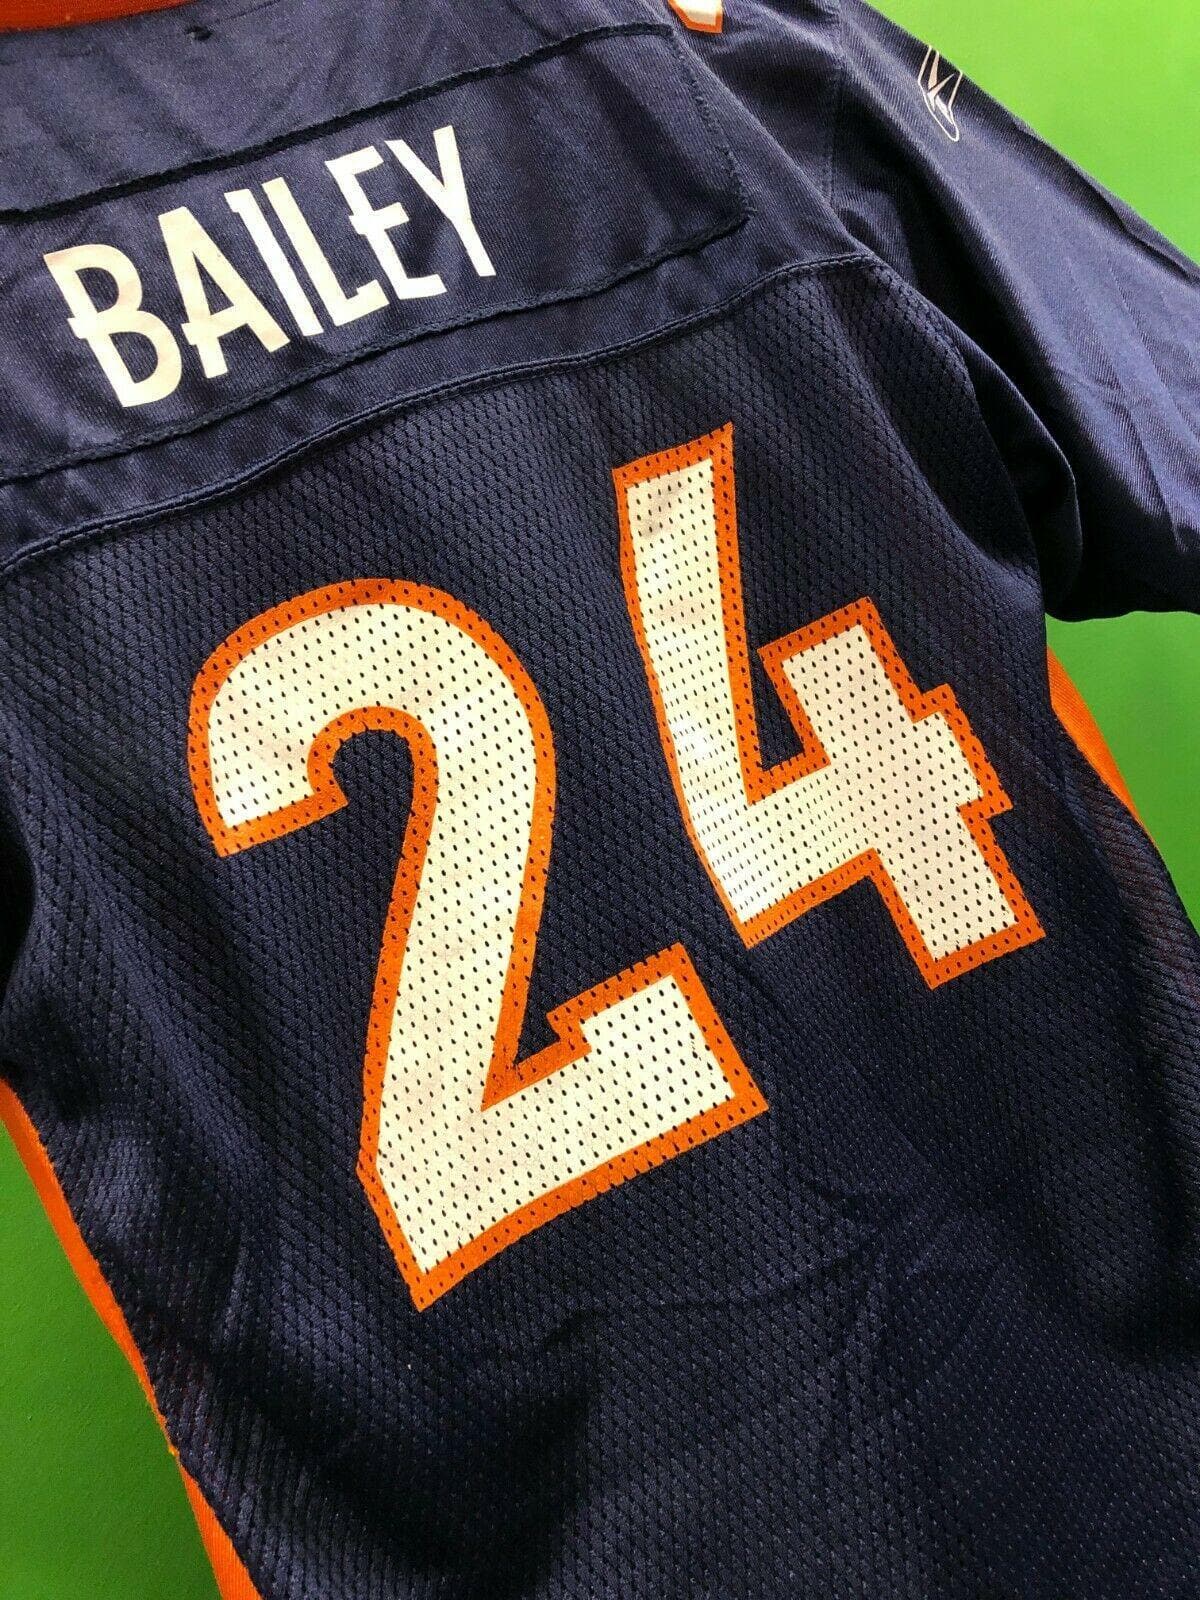 NFL Denver Broncos Champ Bailey #24 Reebok Jersey Youth Large 14-16